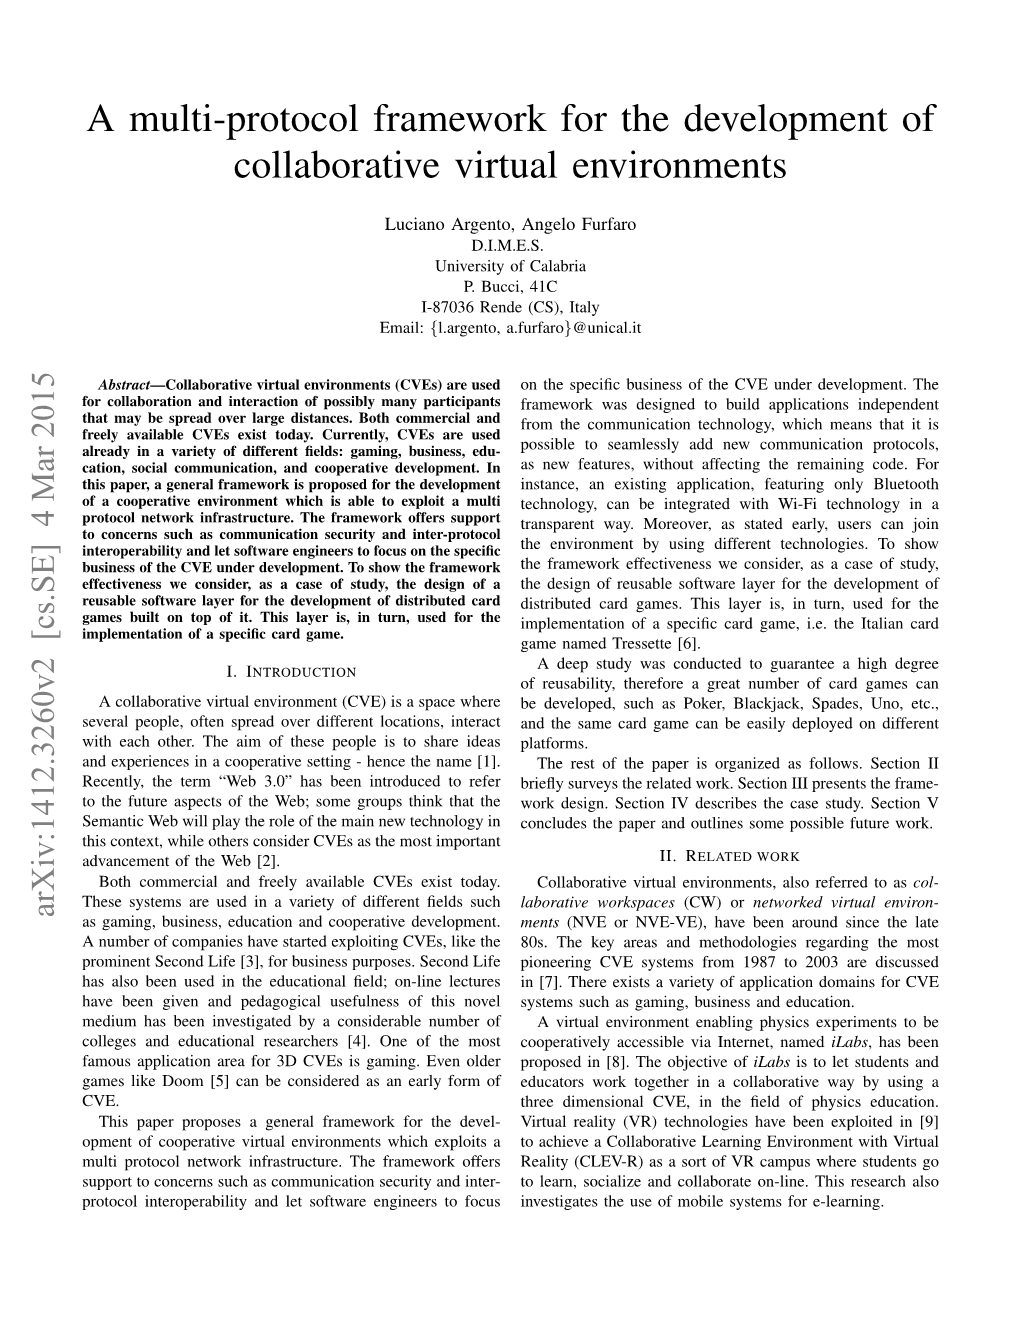 A Multi-Protocol Framework for the Development of Collaborative Virtual Environments